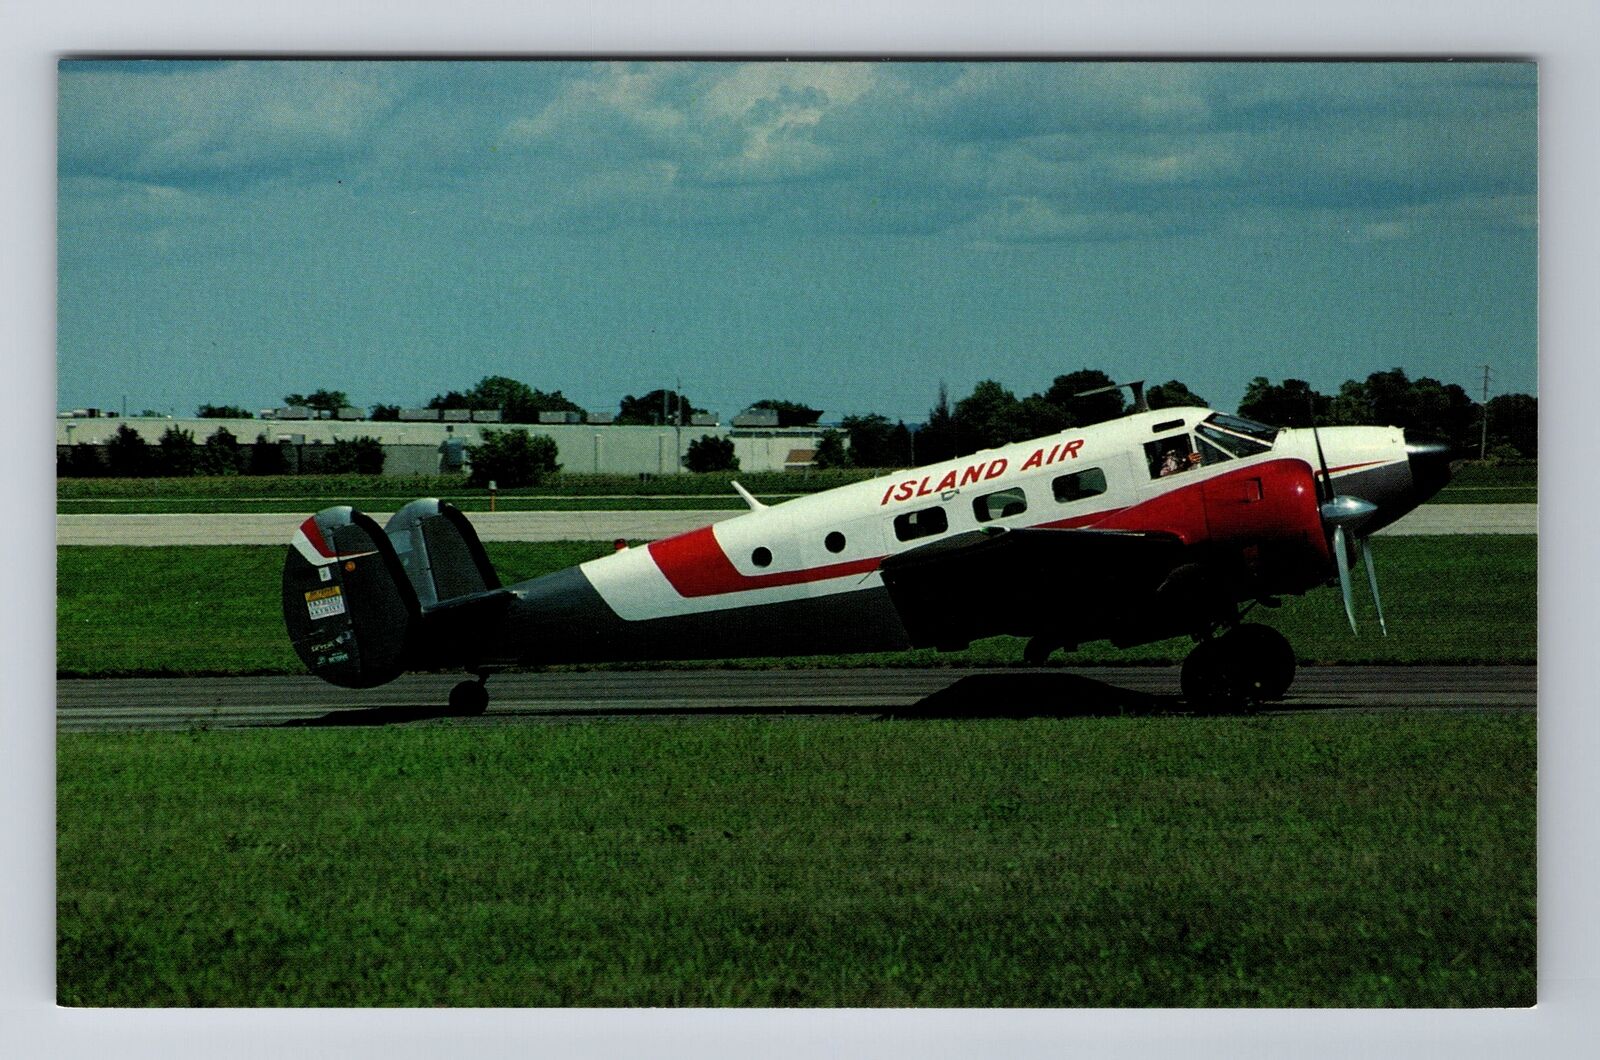 Oshkosh WI-Wisconsin, Island Air Beech 18, Plane Transportation Vintage Postcard